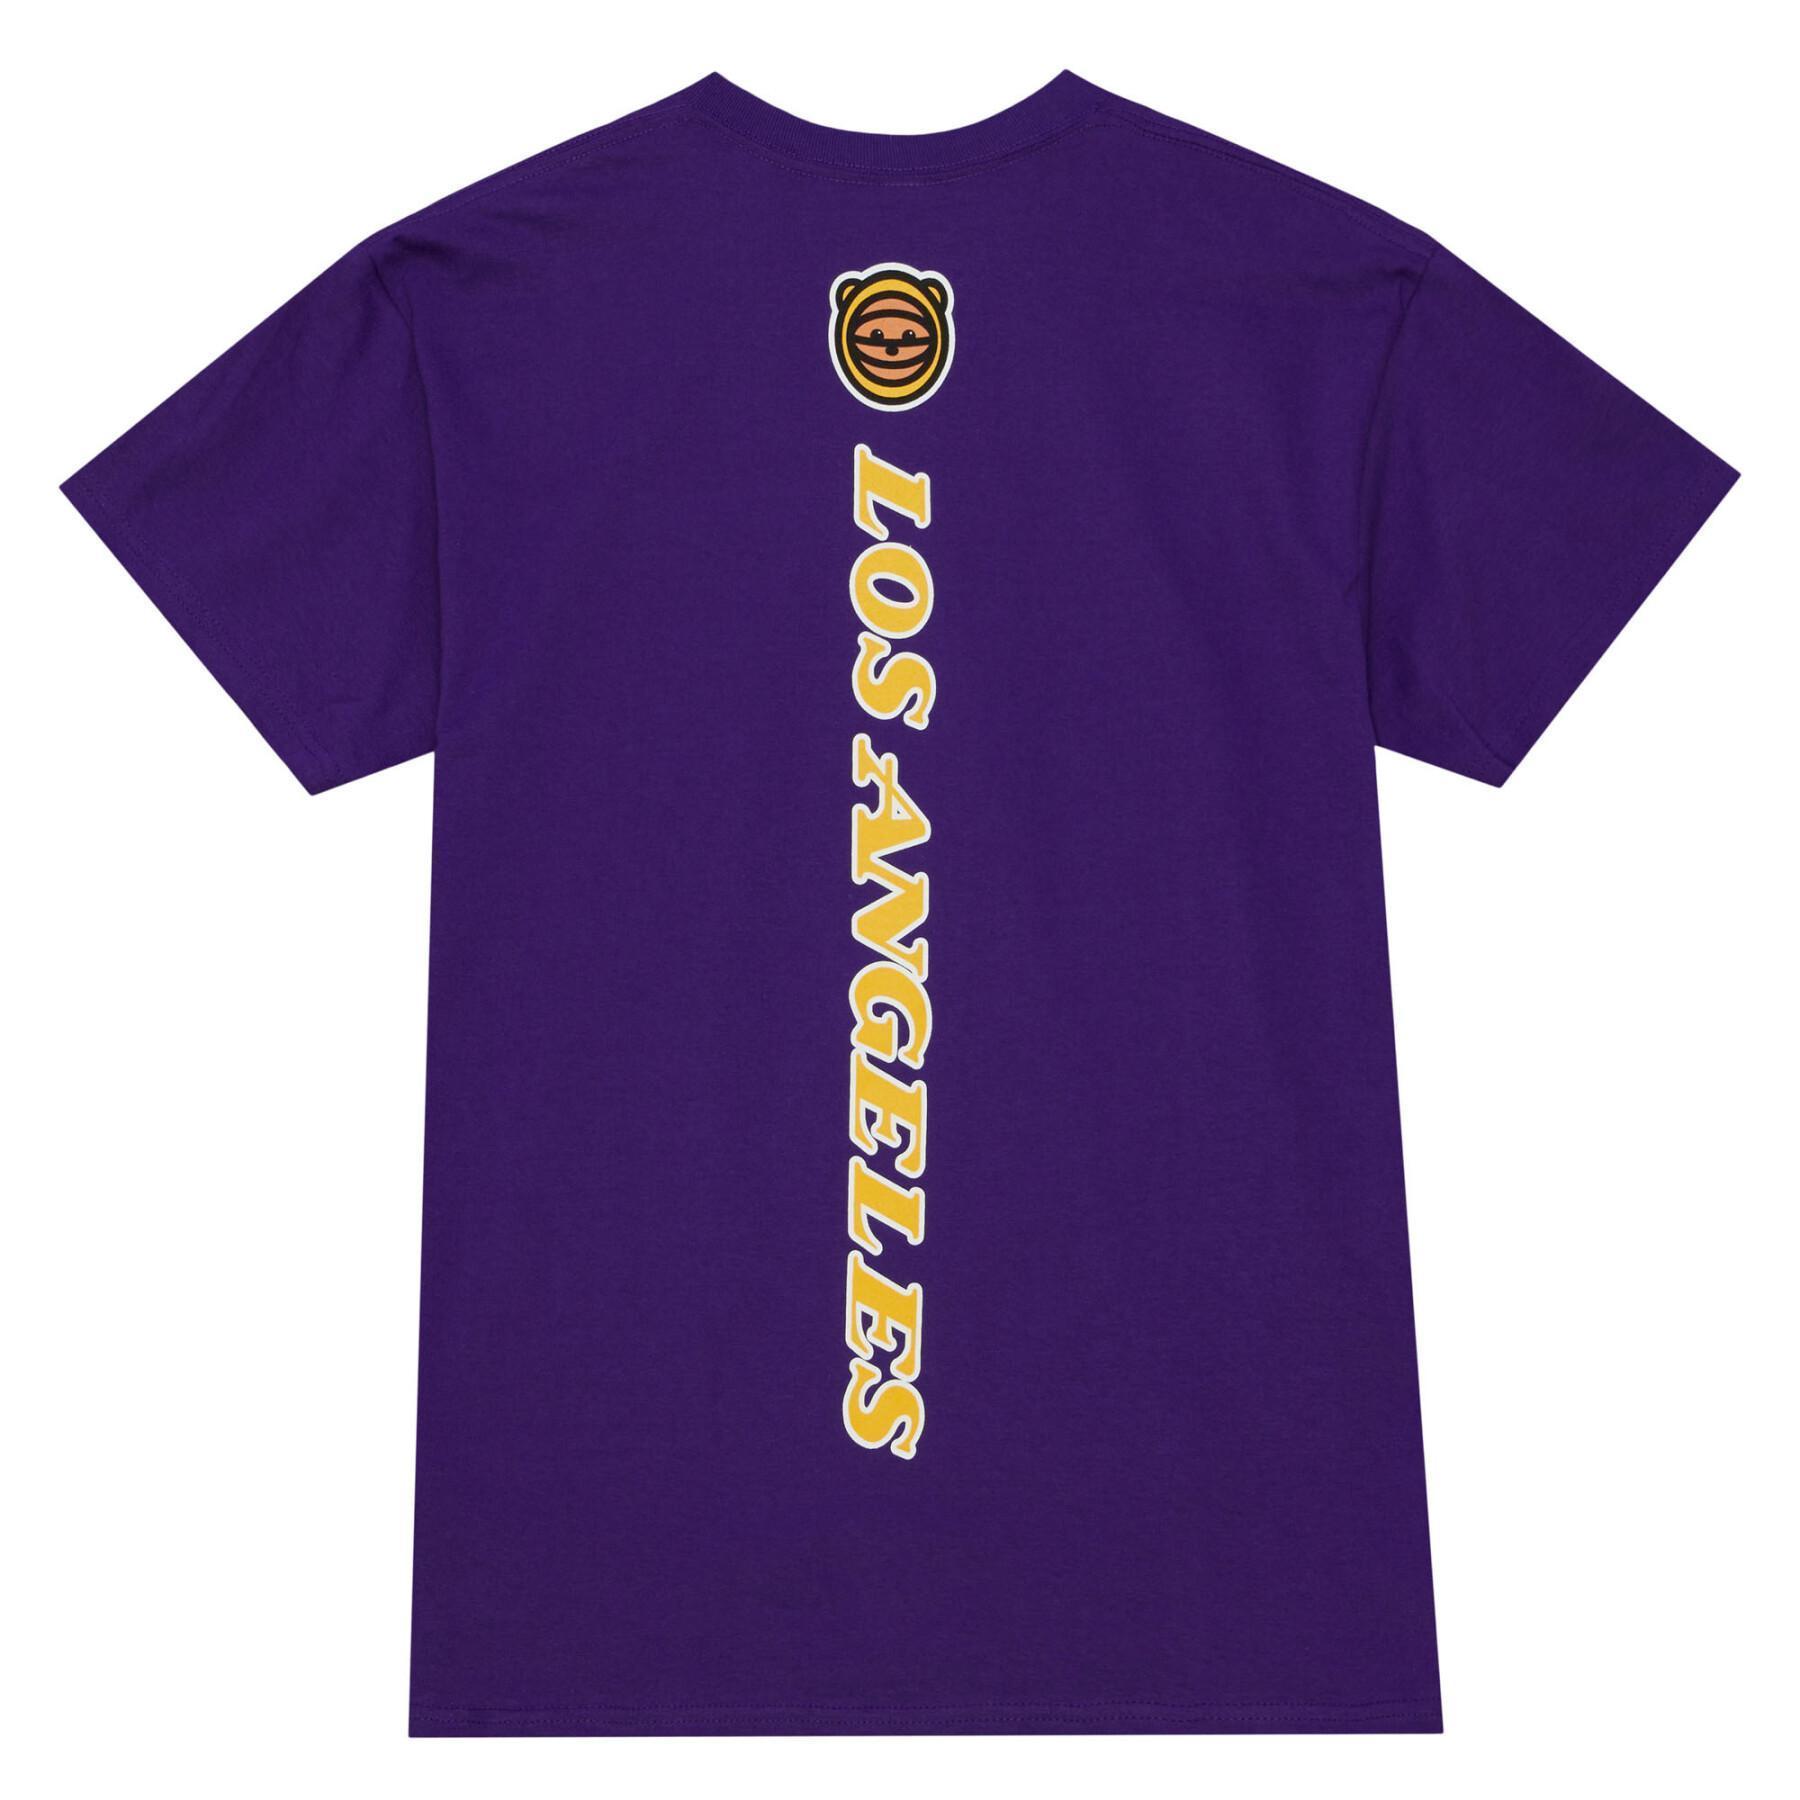 T-shirt Los Angeles Lakers Ozuna